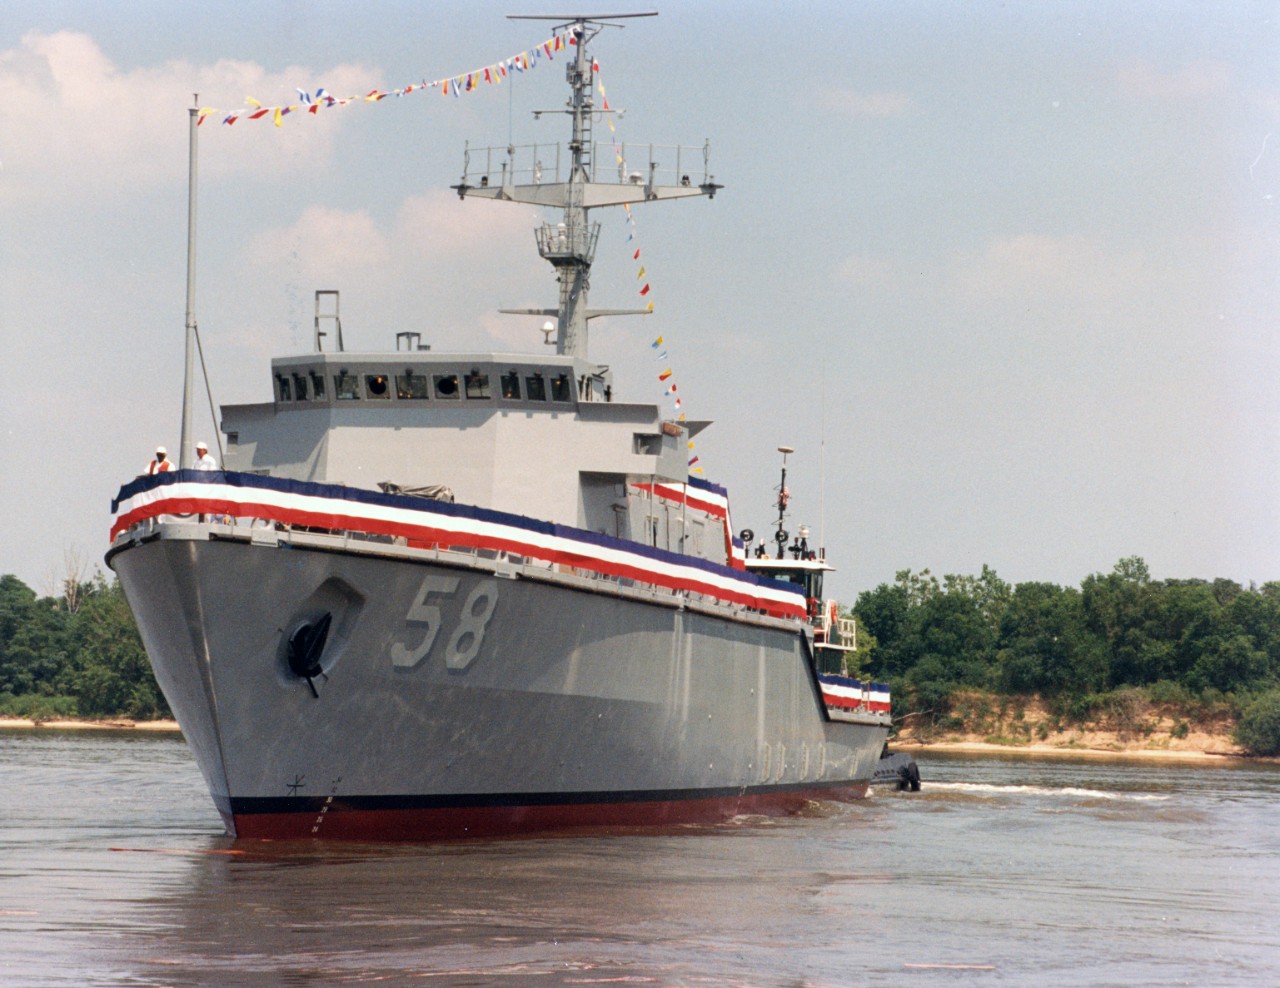 USS Blackhawk (MHC-58), post launching ceremony, at Savannah, GA